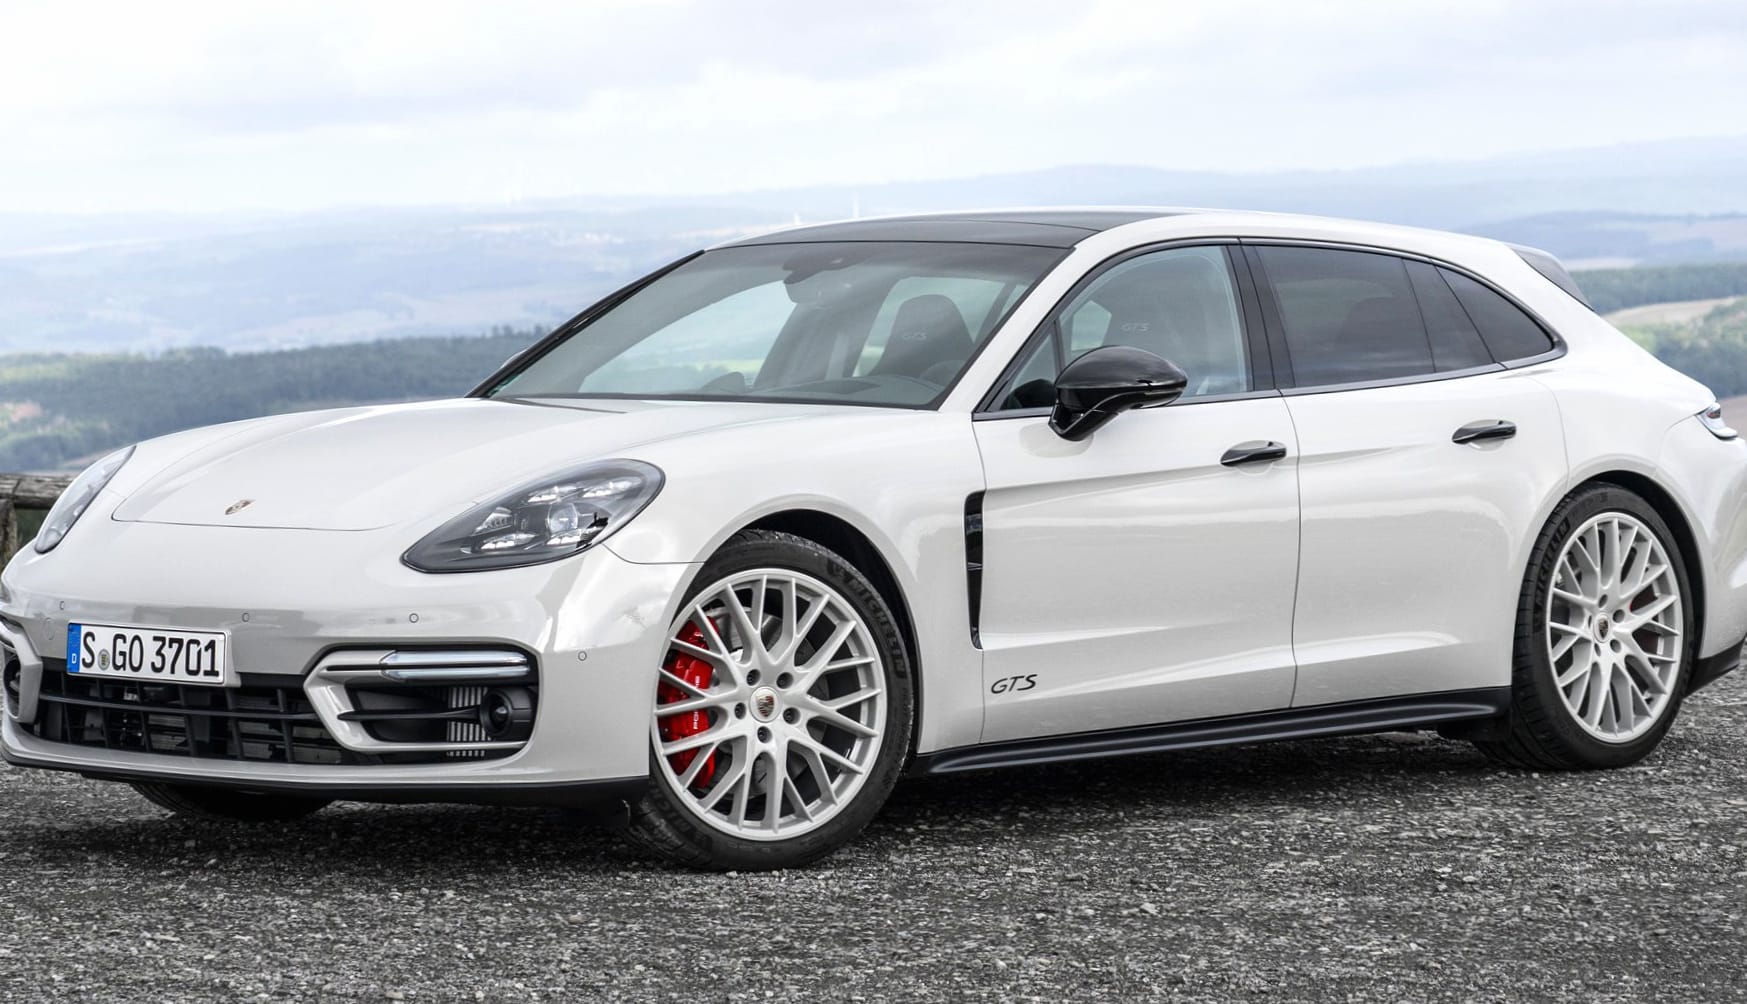 Porsche Panamera GTS Sport Turismo at 1024 x 1024 iPad size wallpapers HD quality